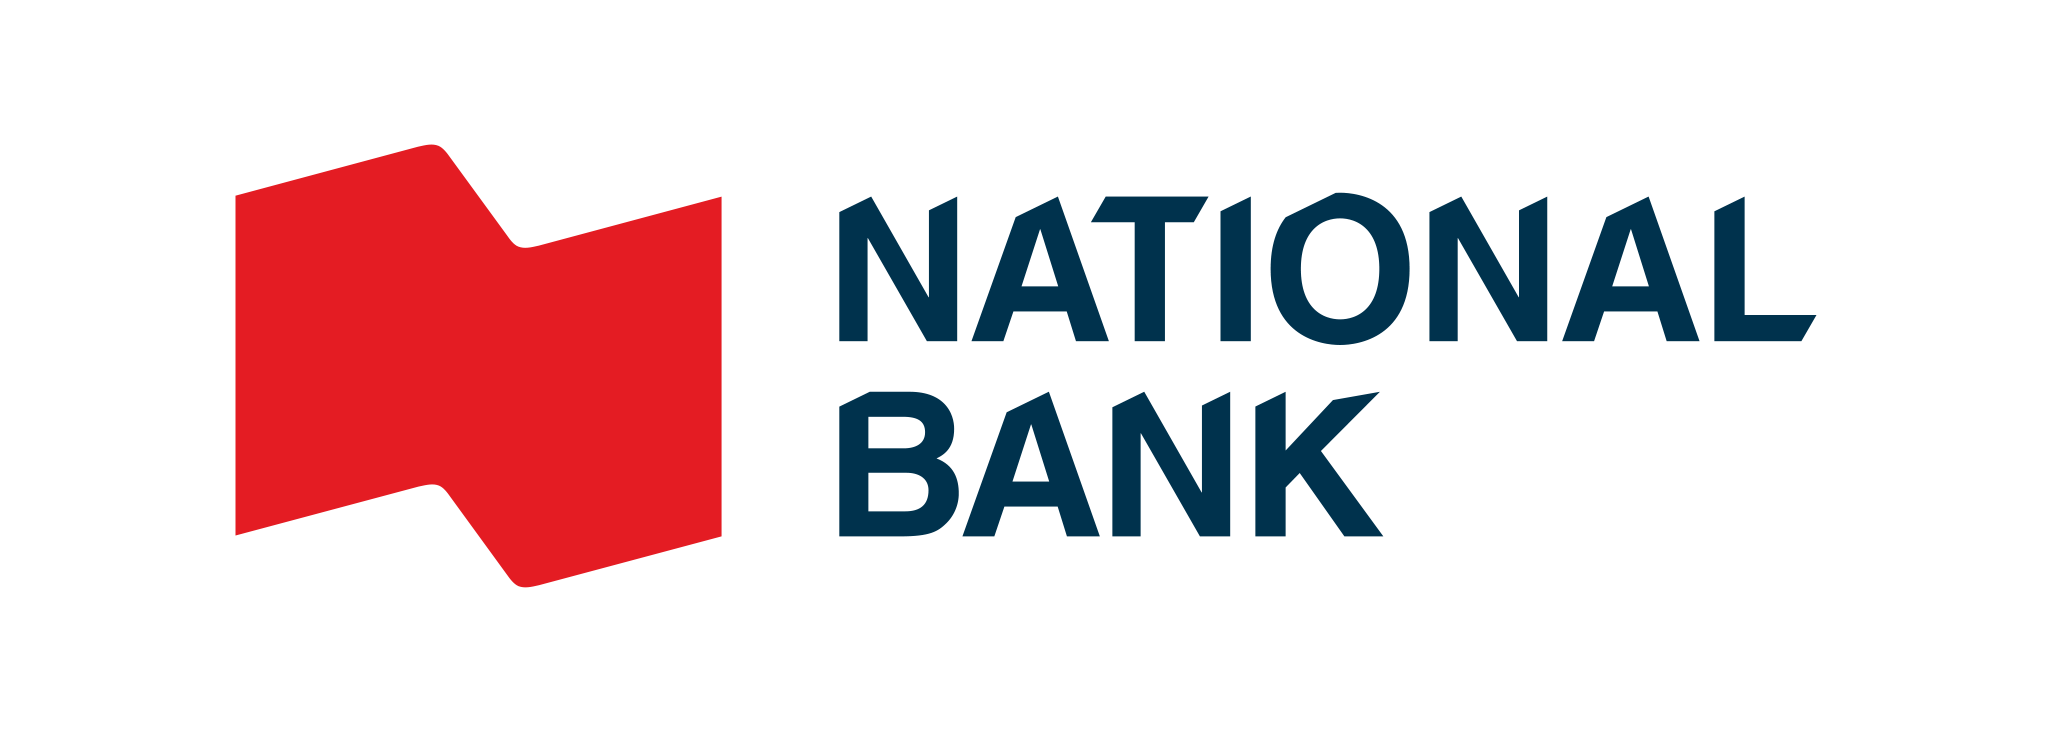 national bank logo